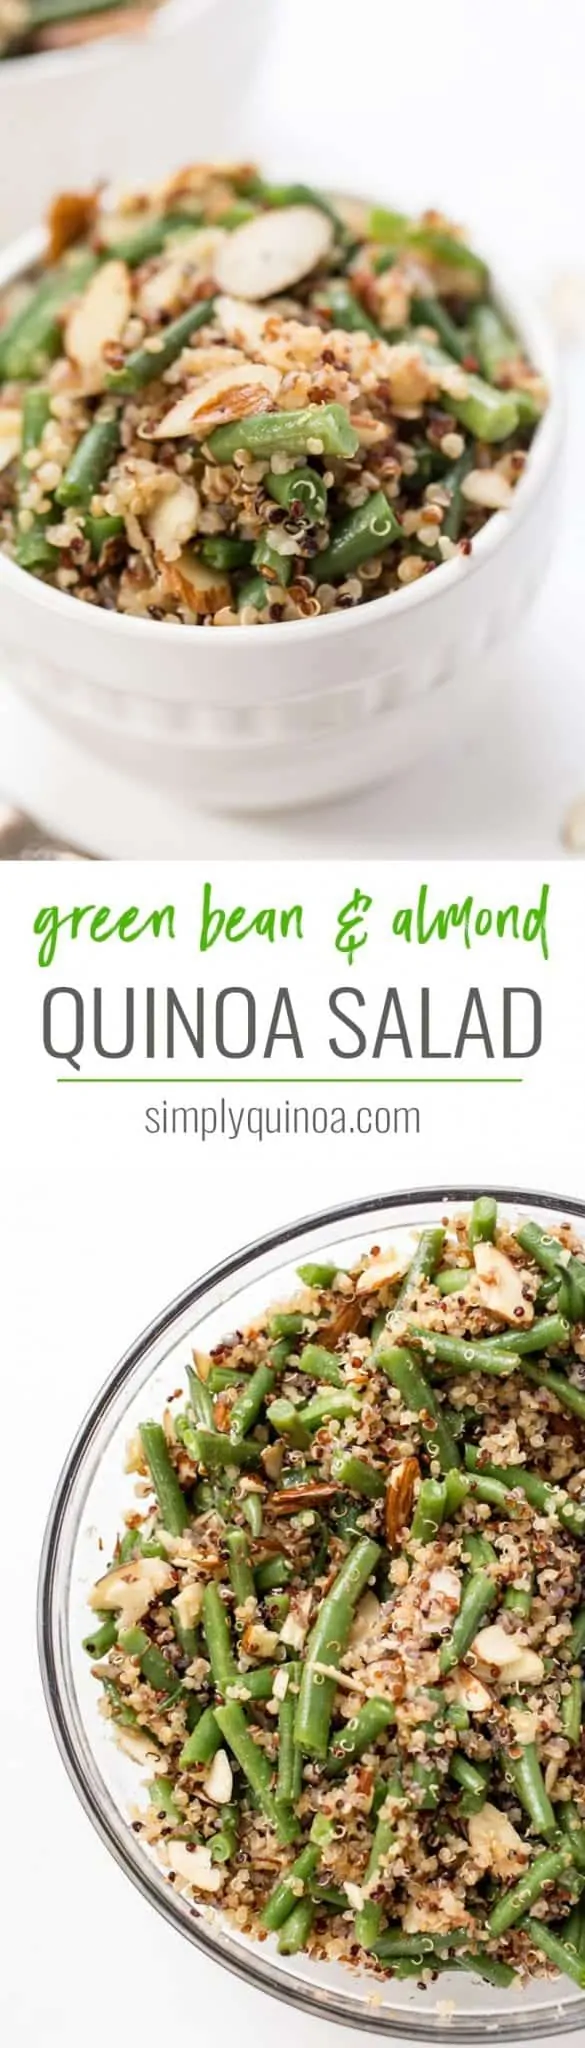 healthy green bean and almond quinoa salad